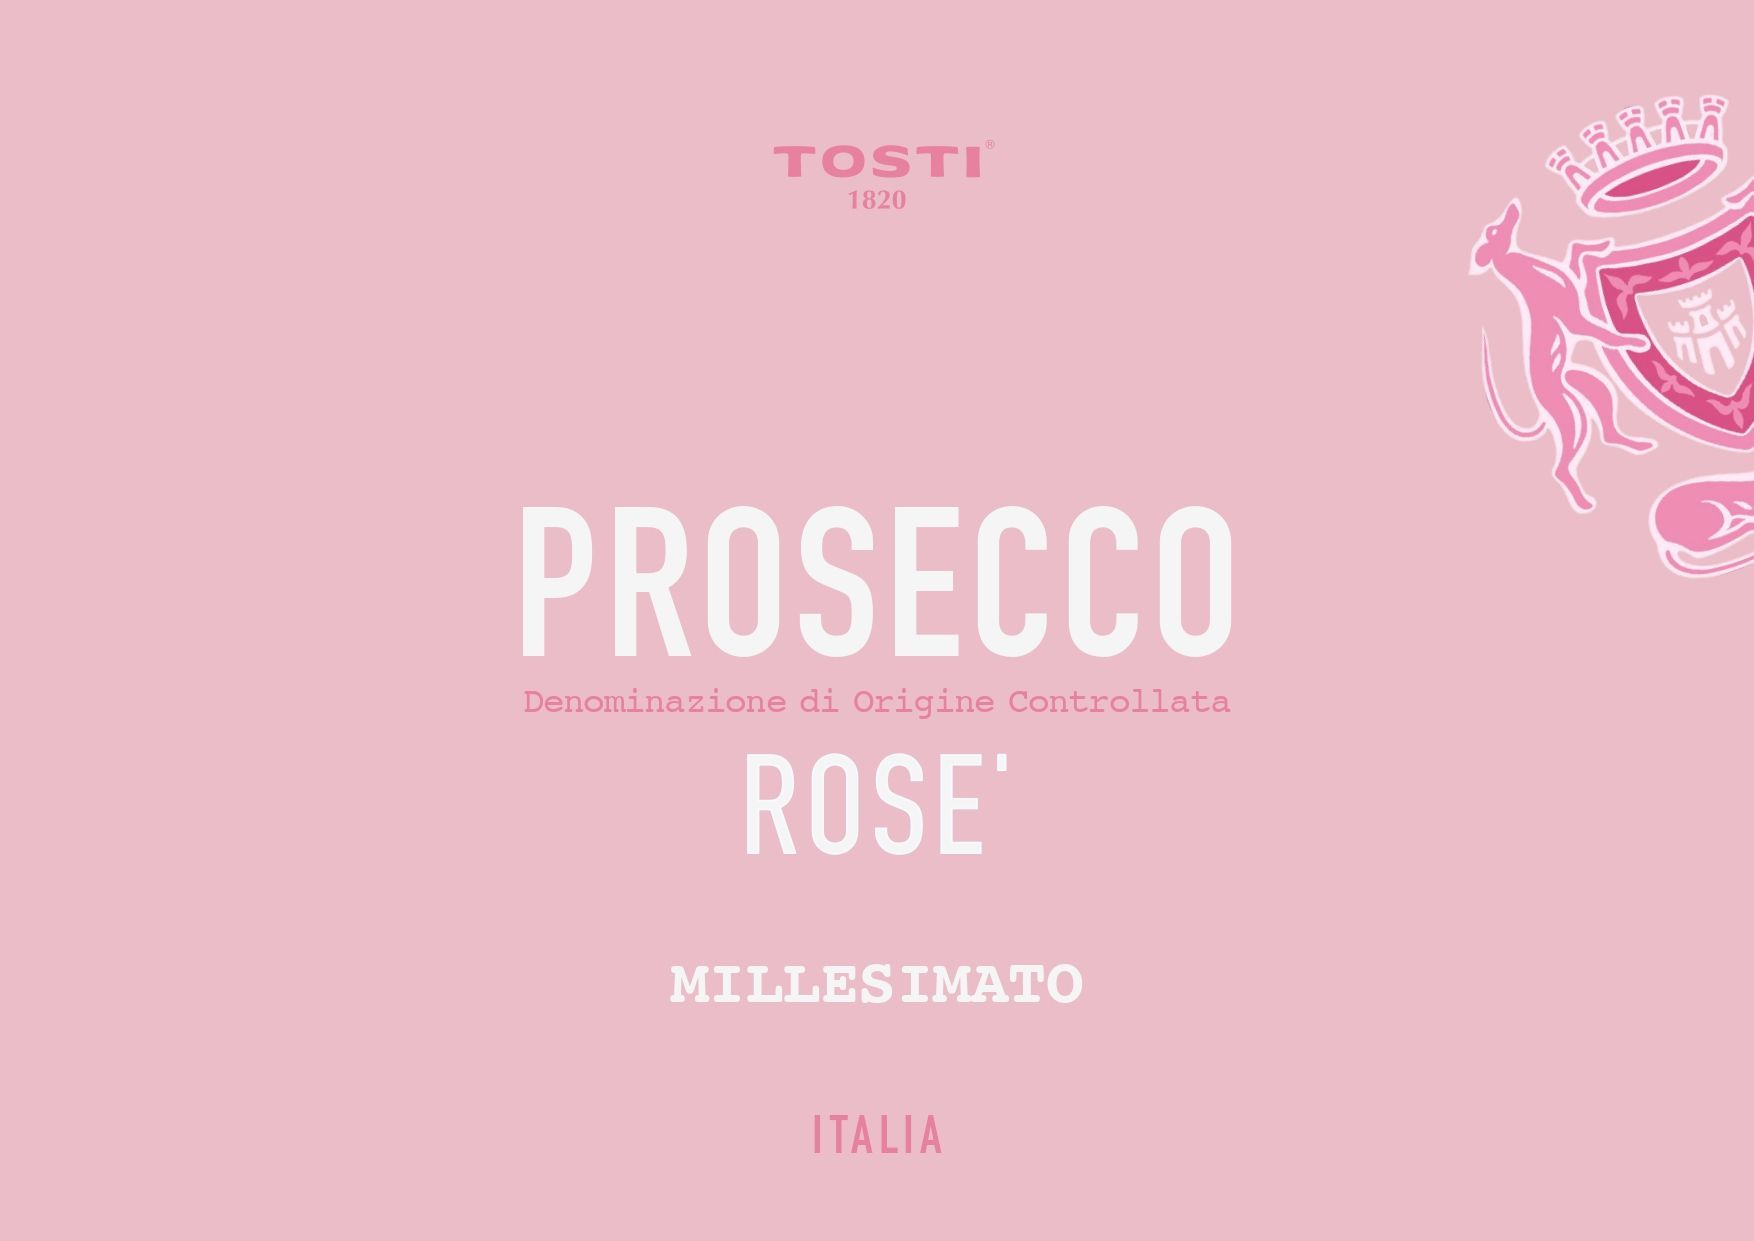 Лучше Prosecco  только Prosecco Rosè!